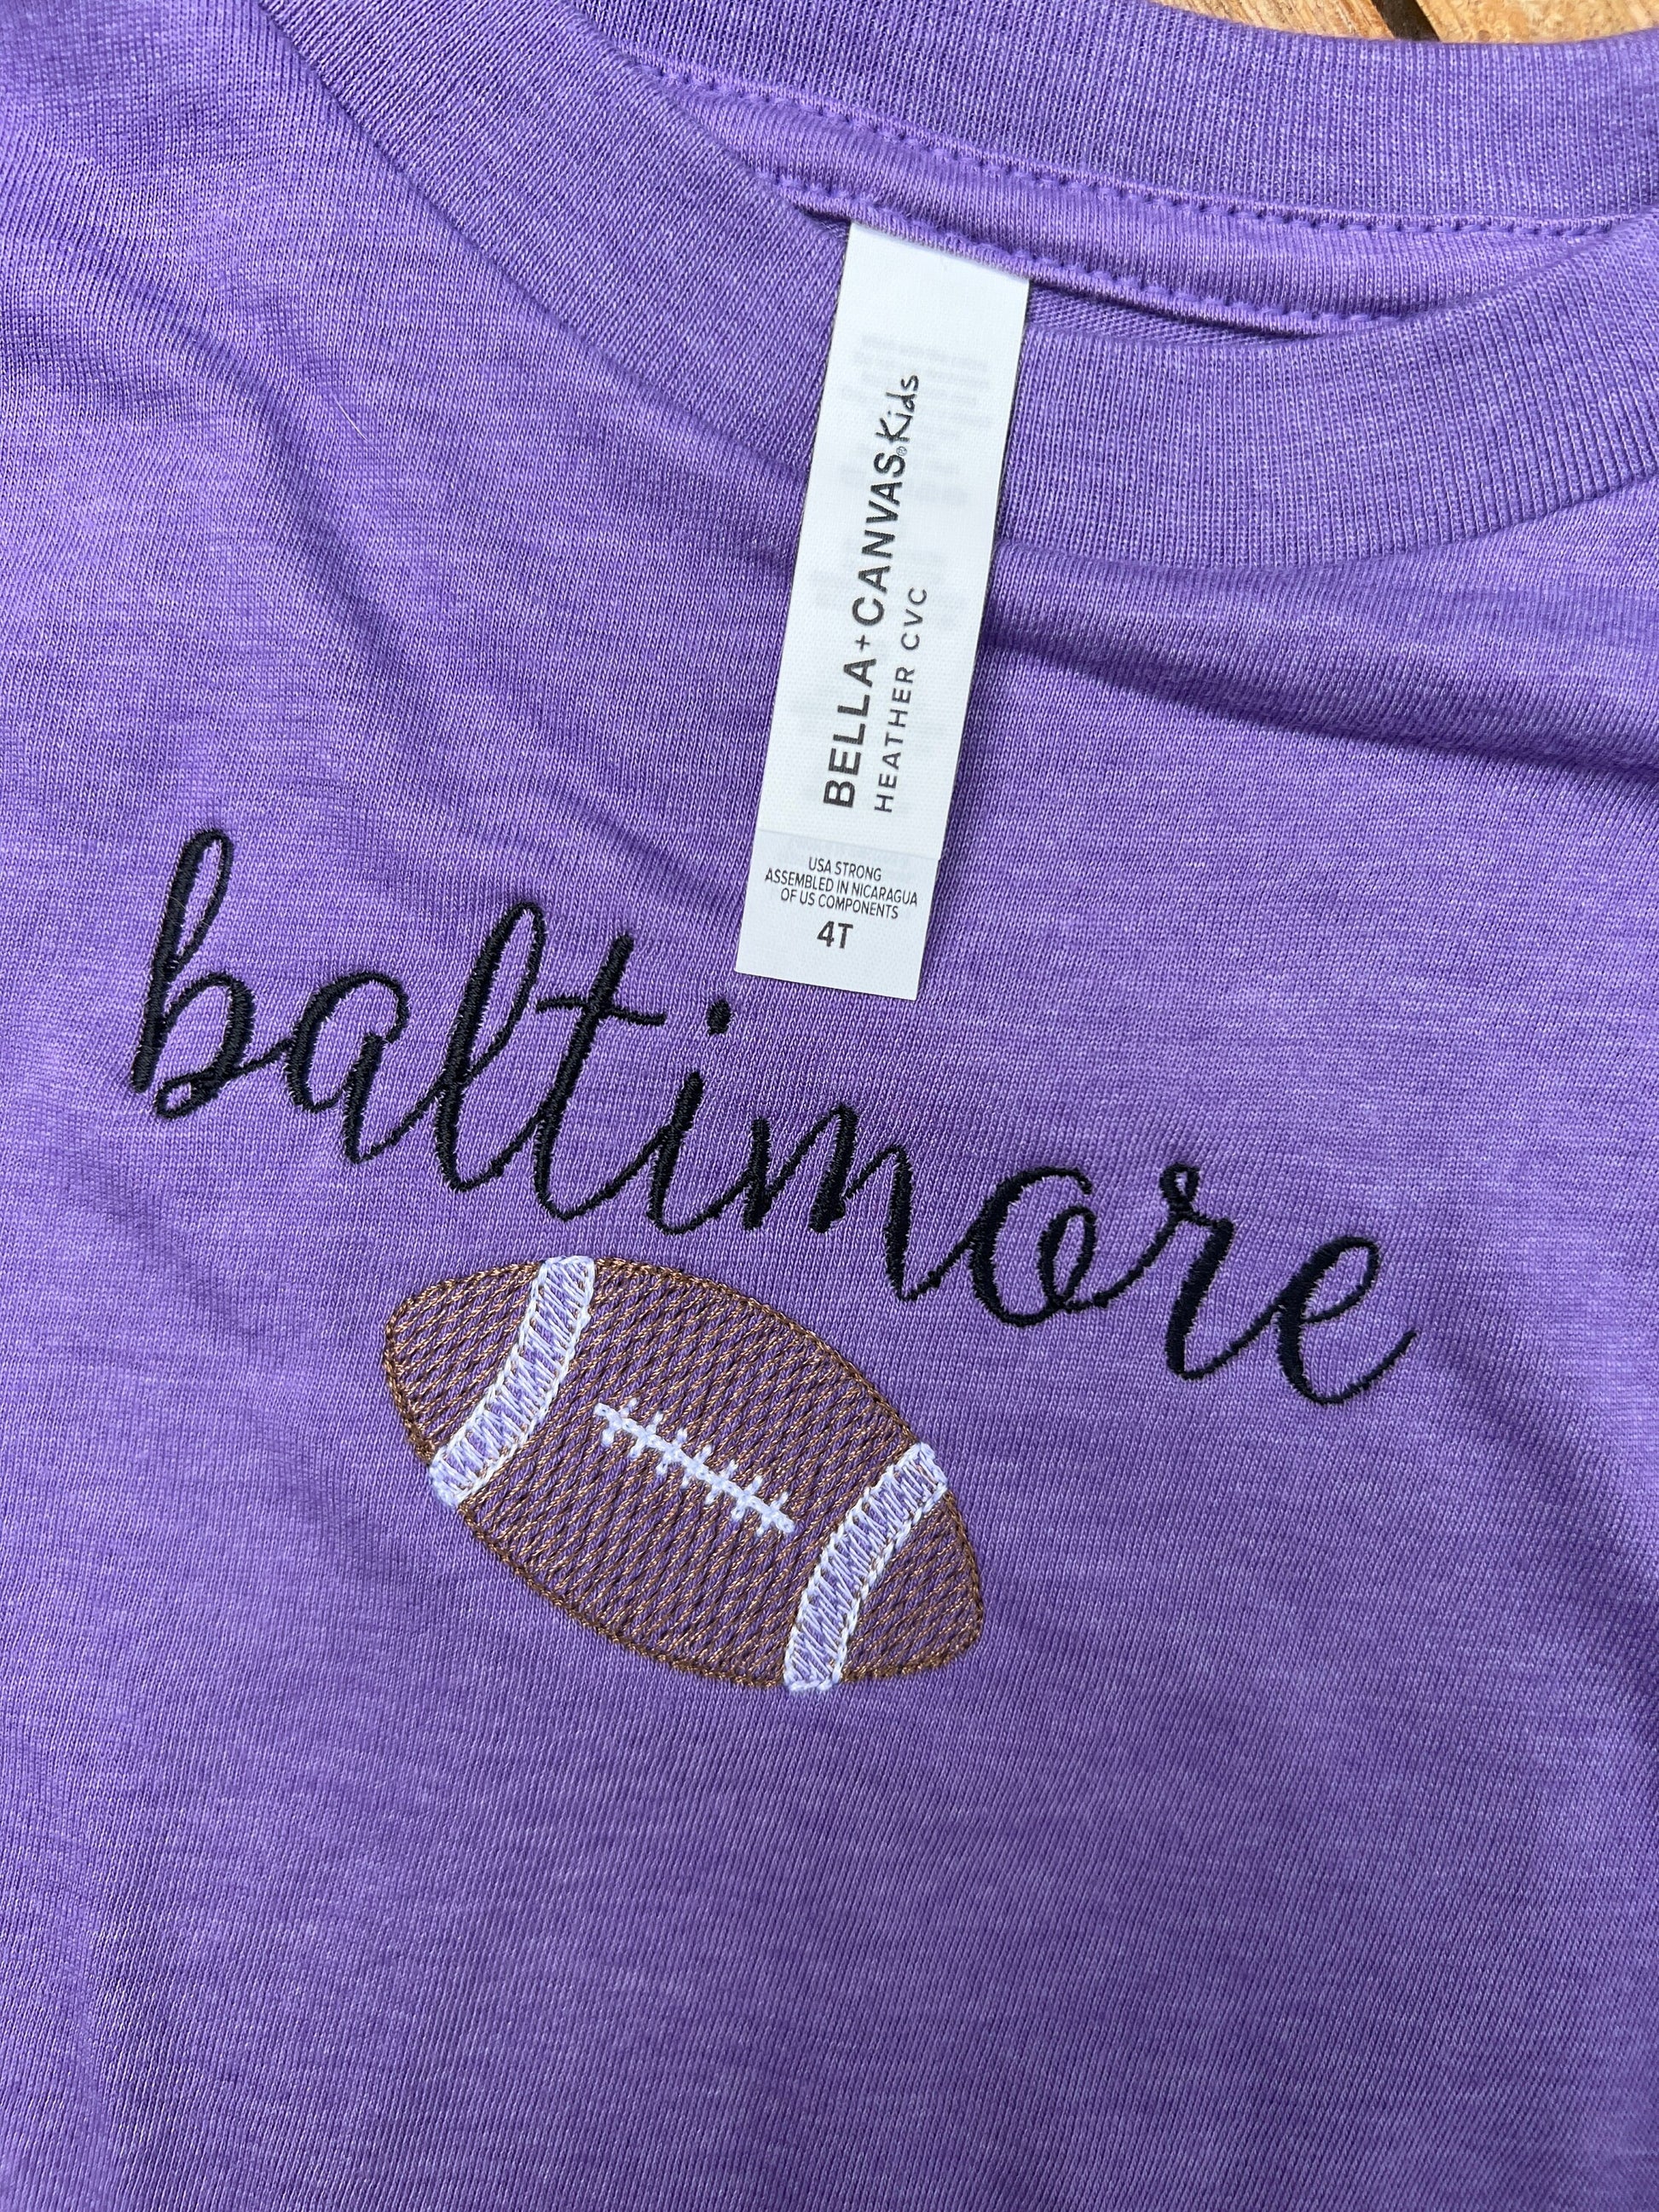 Toddler Football Tshirt Comfort Colors Baseball Tshirt Gifts For Her Football Season Baseball Season Baltimore Football Baltimore Baseball